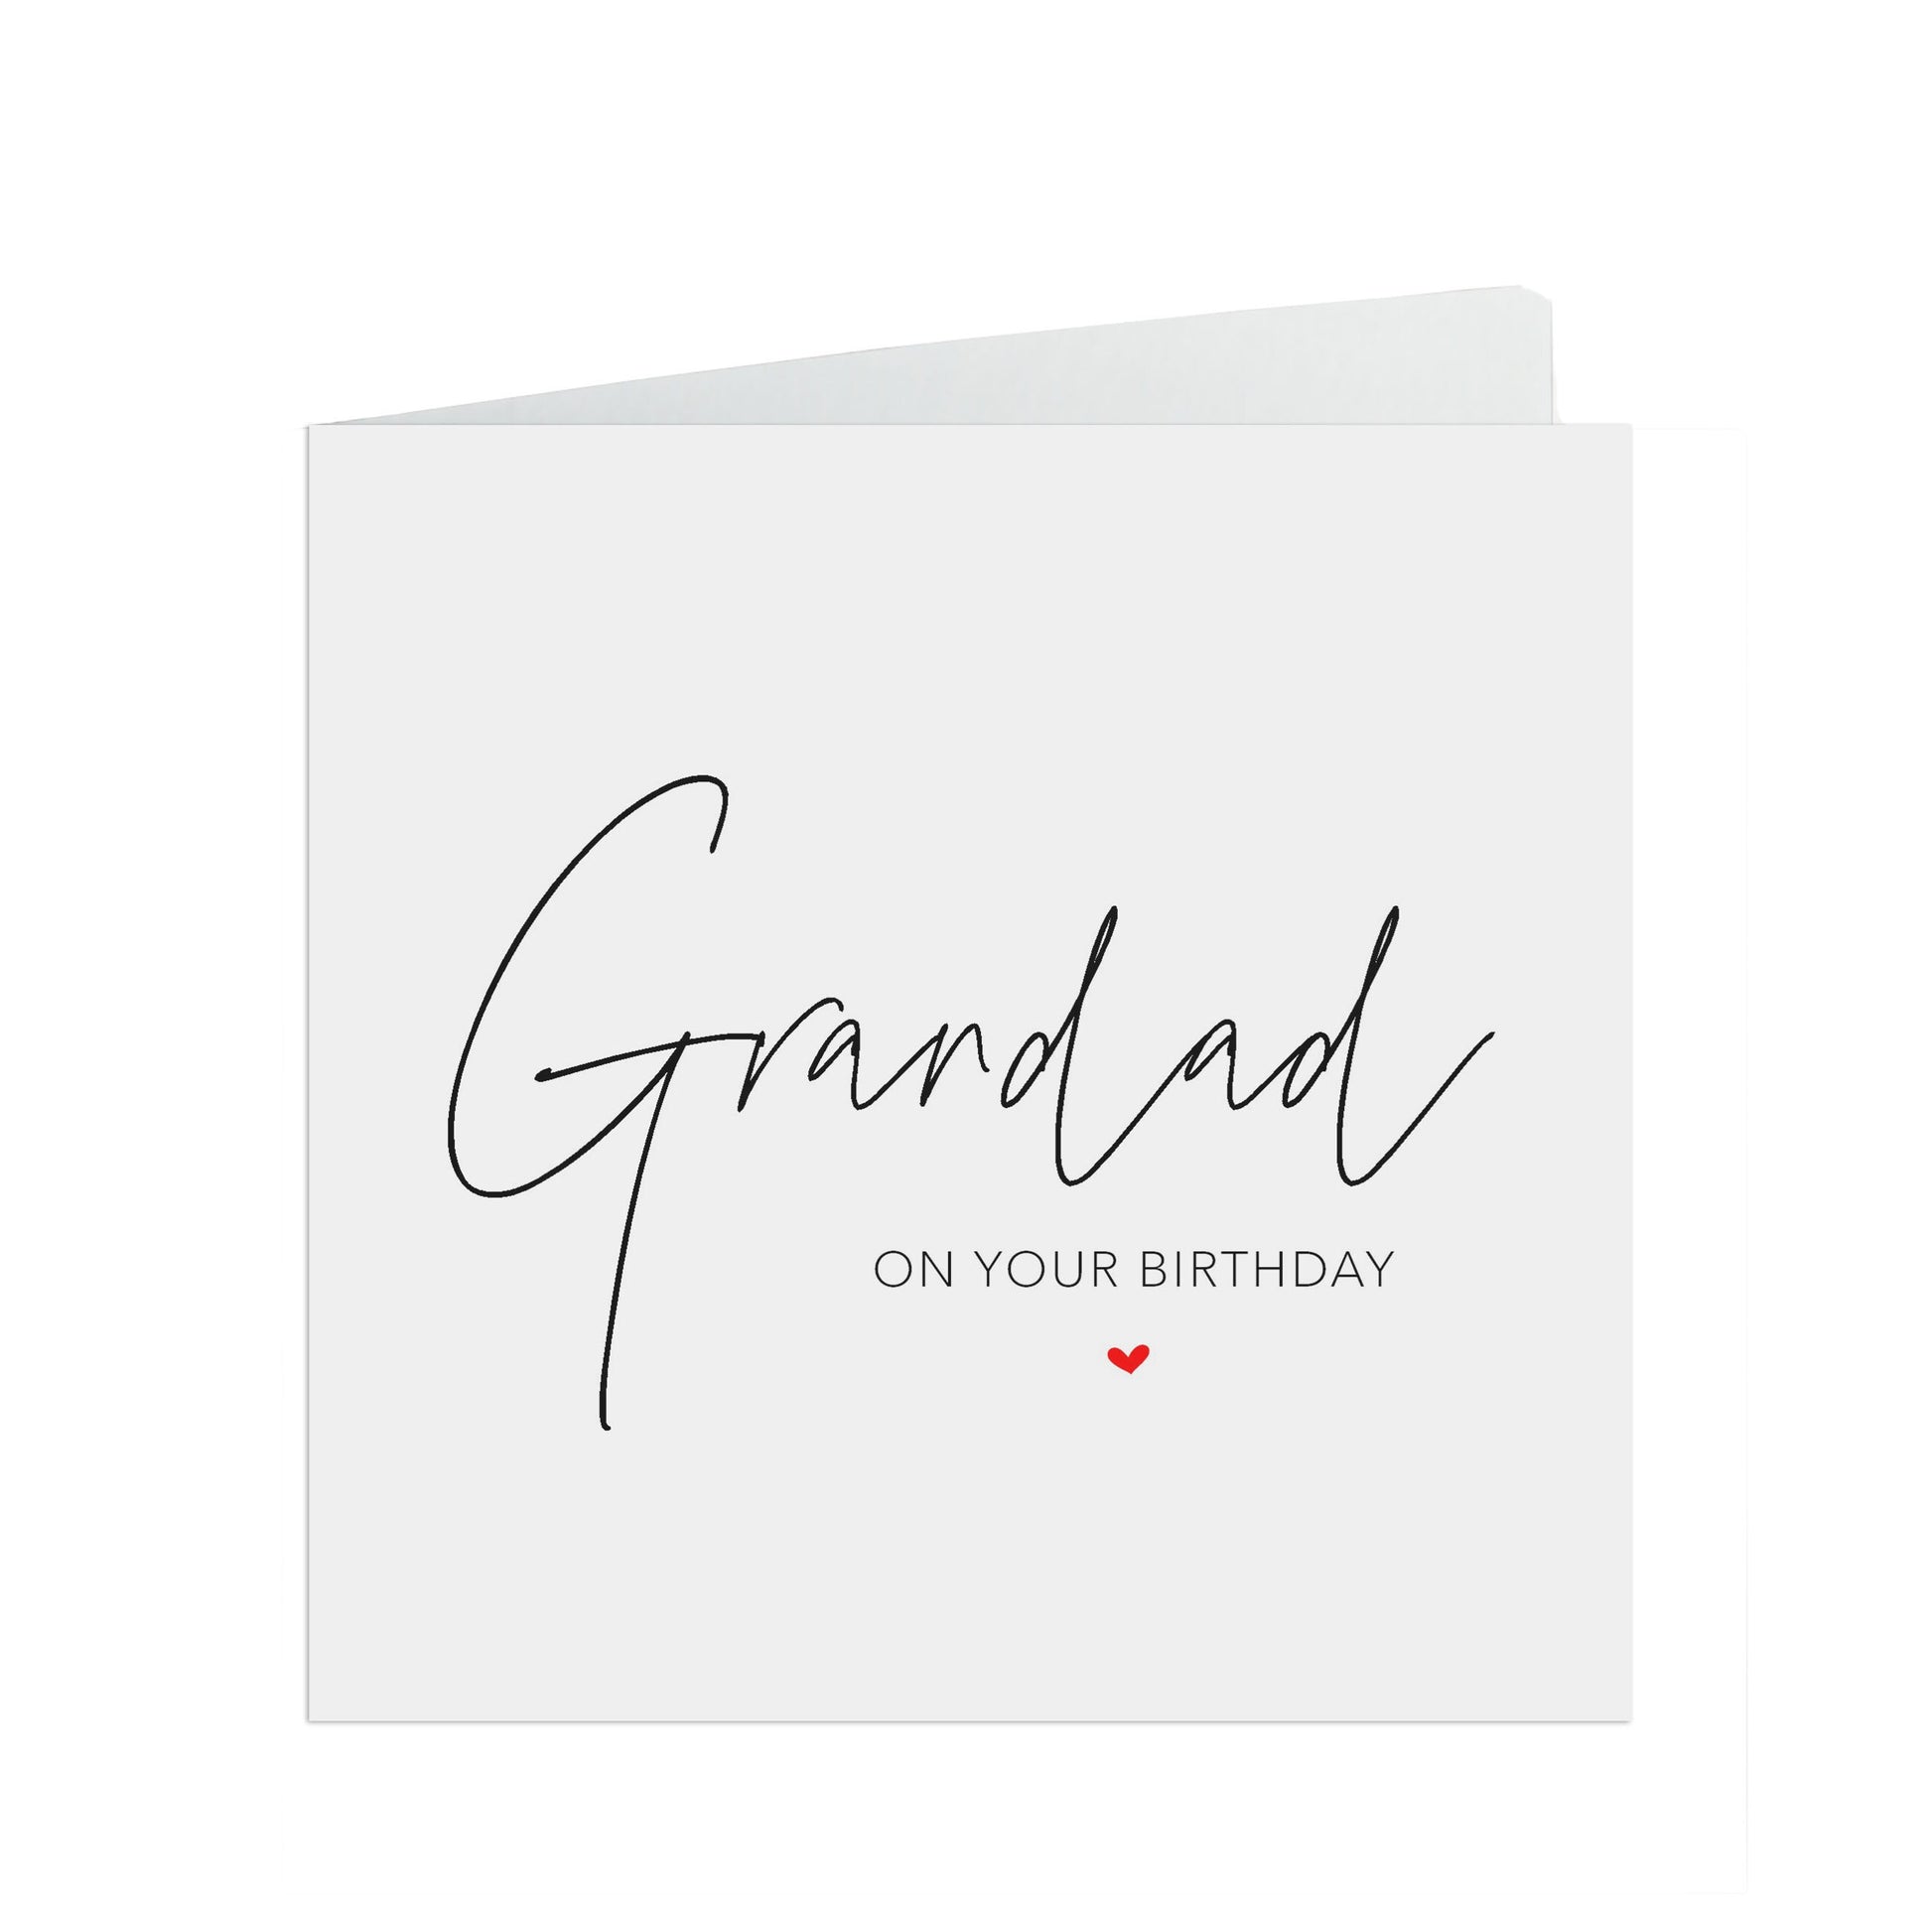 Grandad Birthday Card, Simple Elegant Design